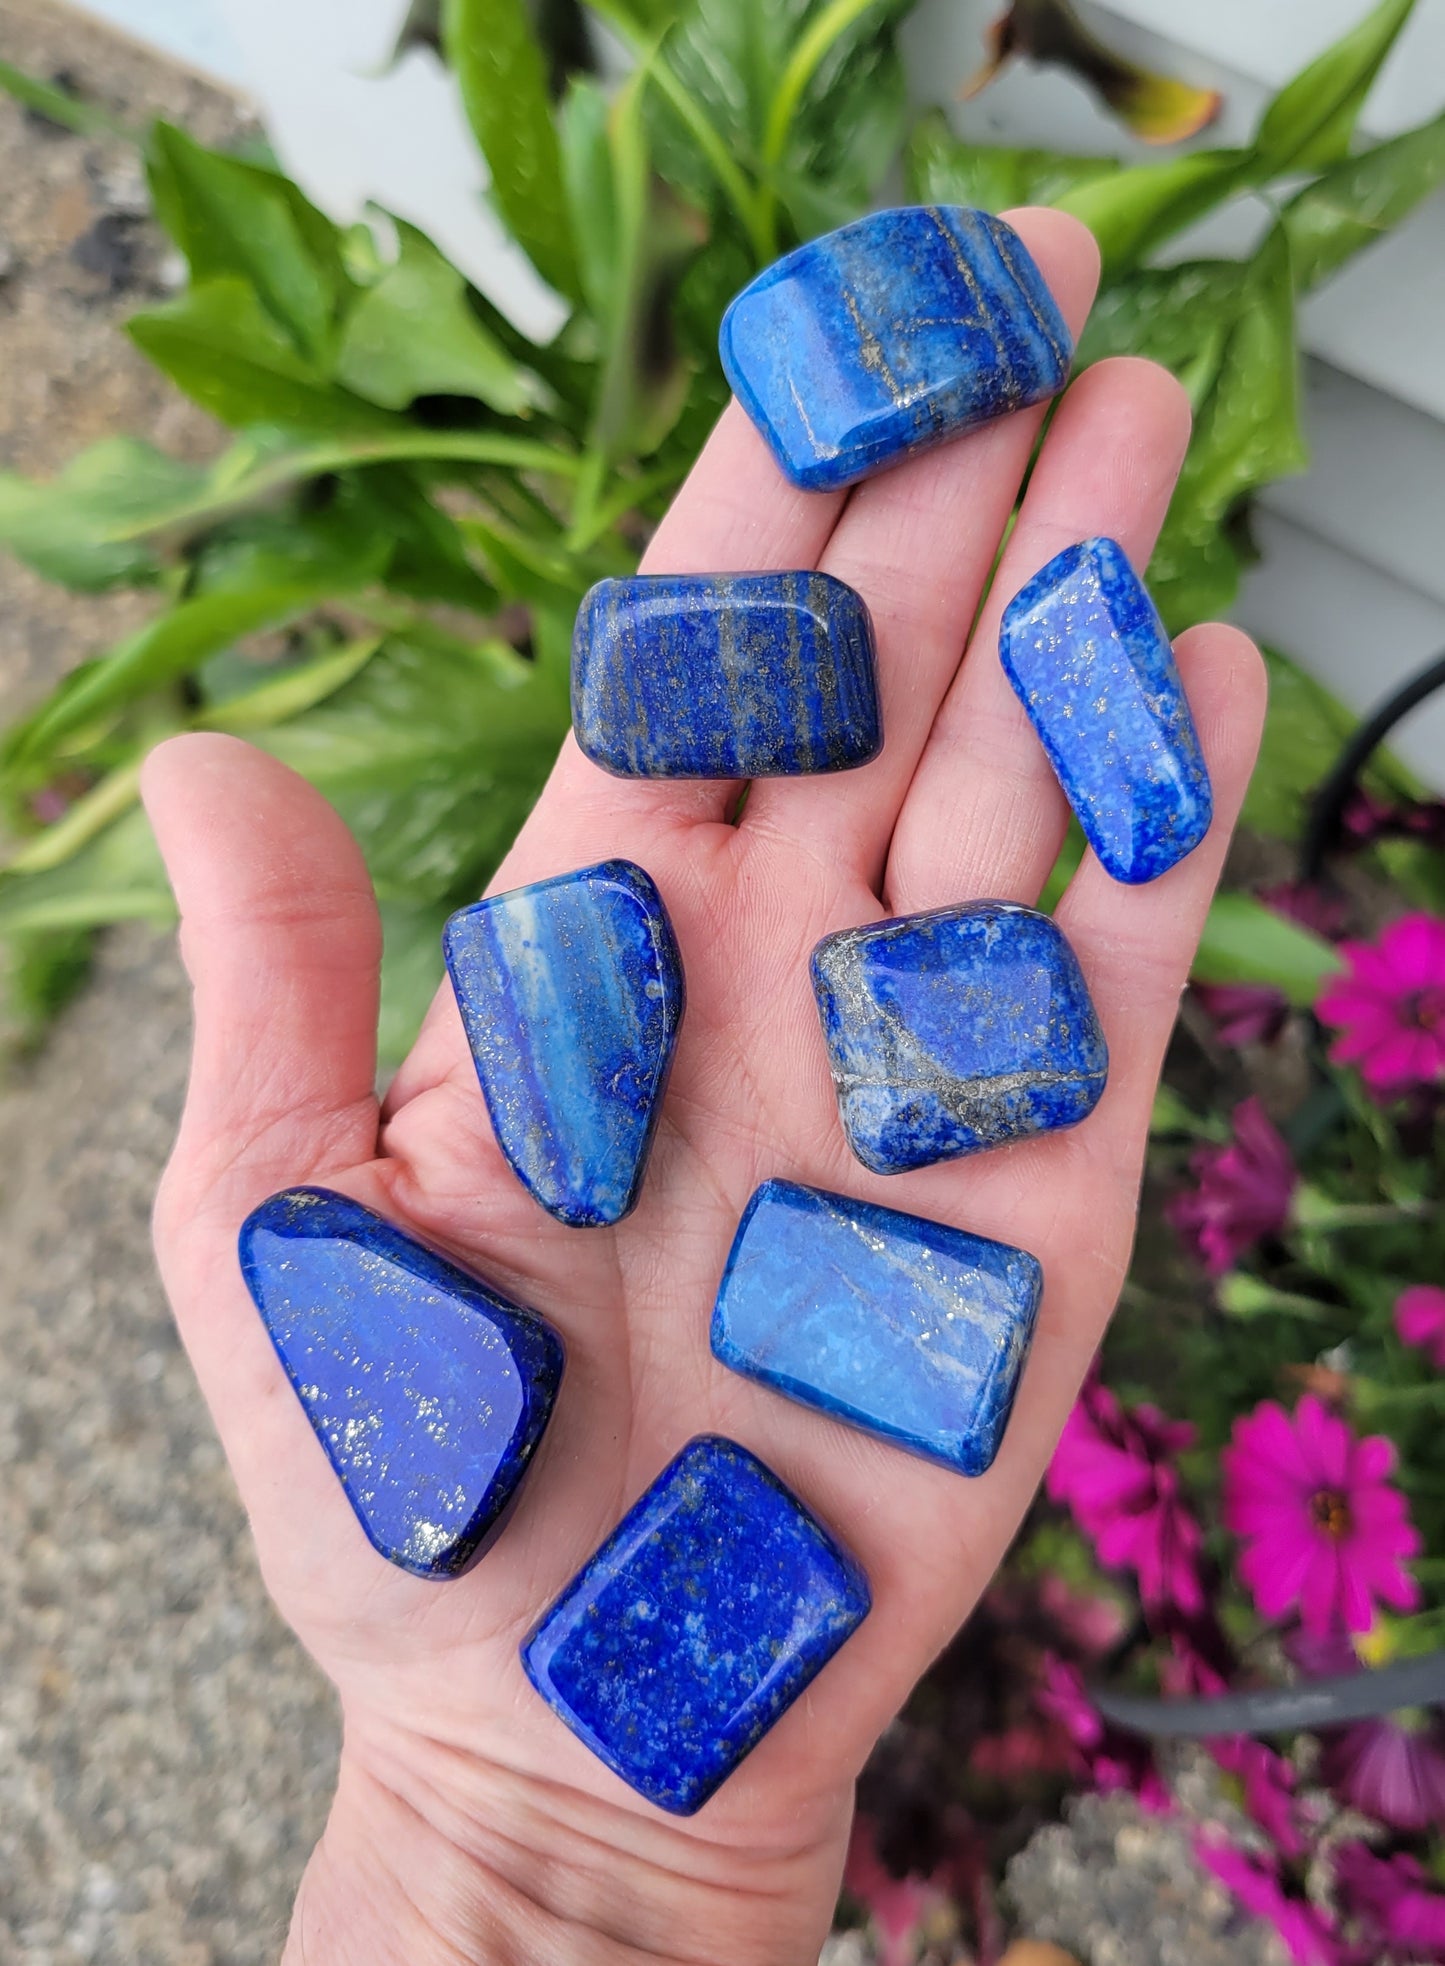 Lapis Lazuli Pocket Stone from Pakistan